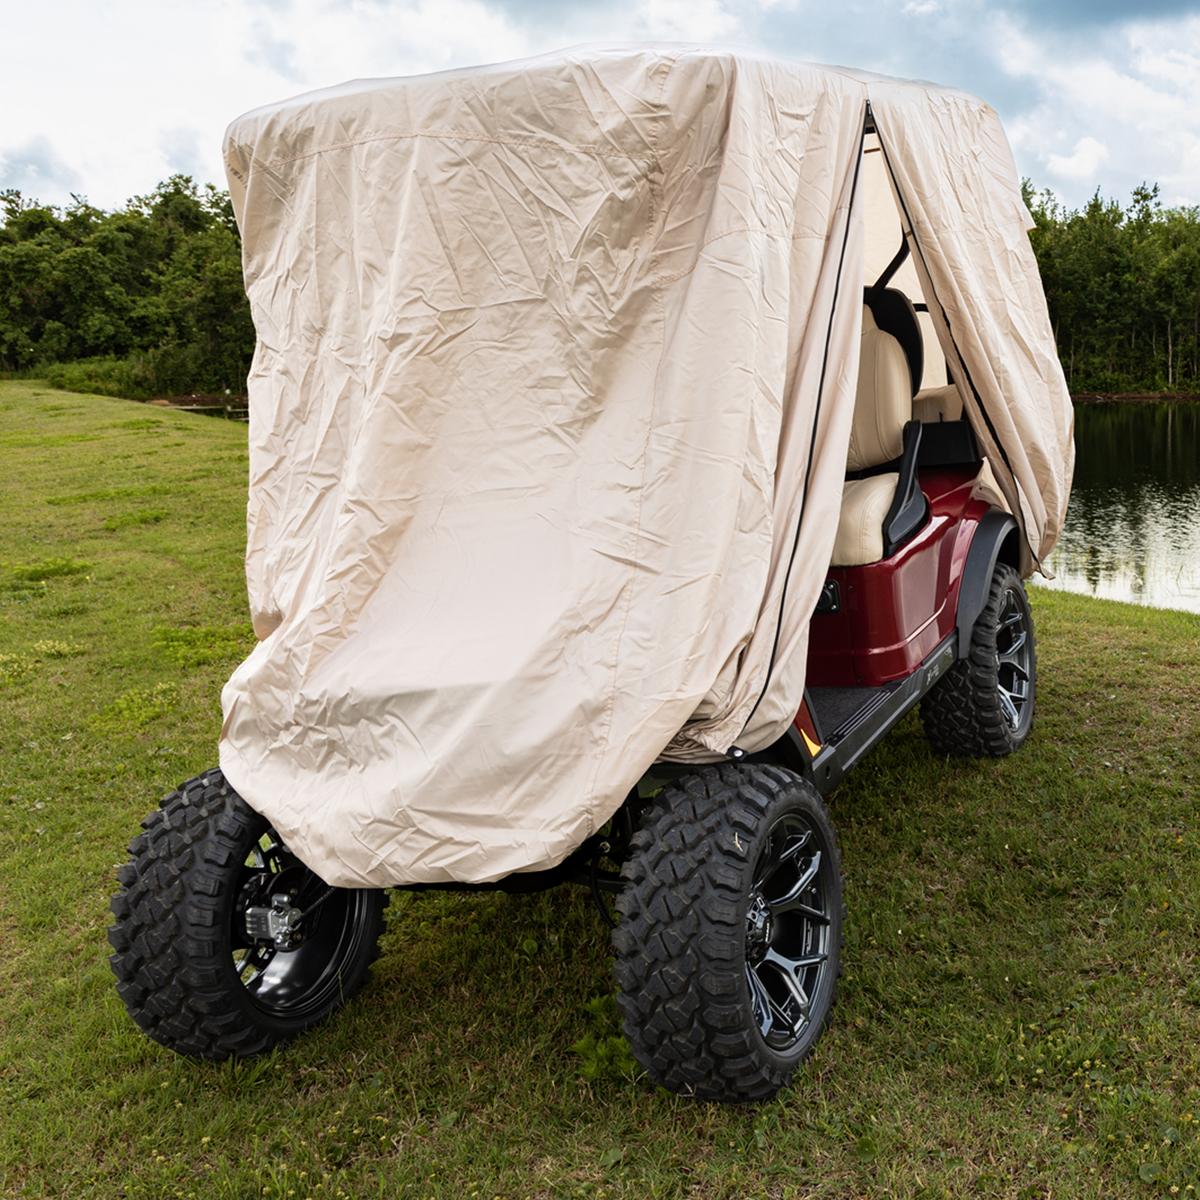 RedDot 84” Golf Cart Storage Cover